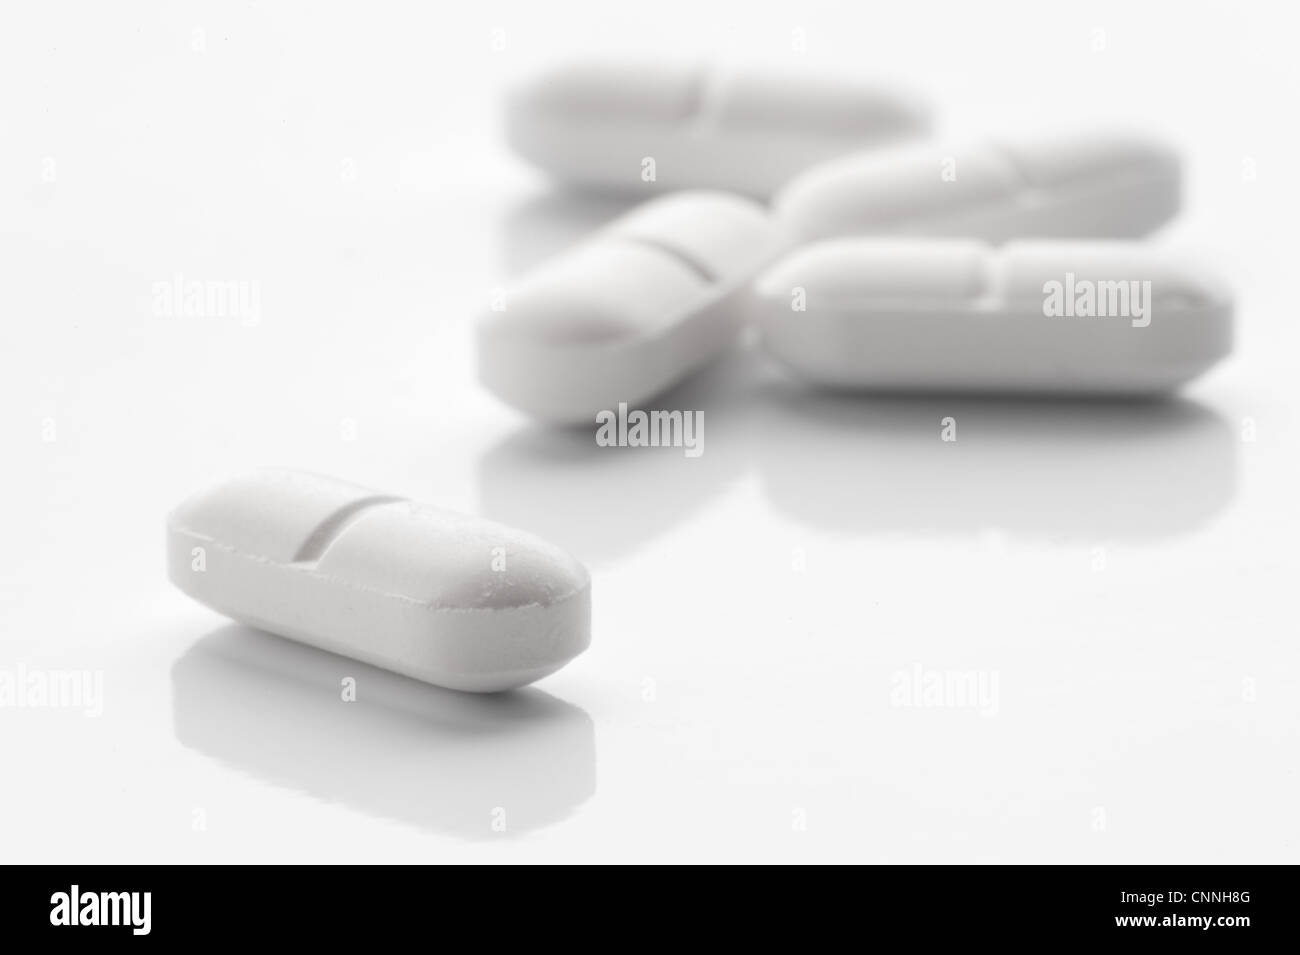 White lozenge shaped tablets on a white reflective surface Stock Photo